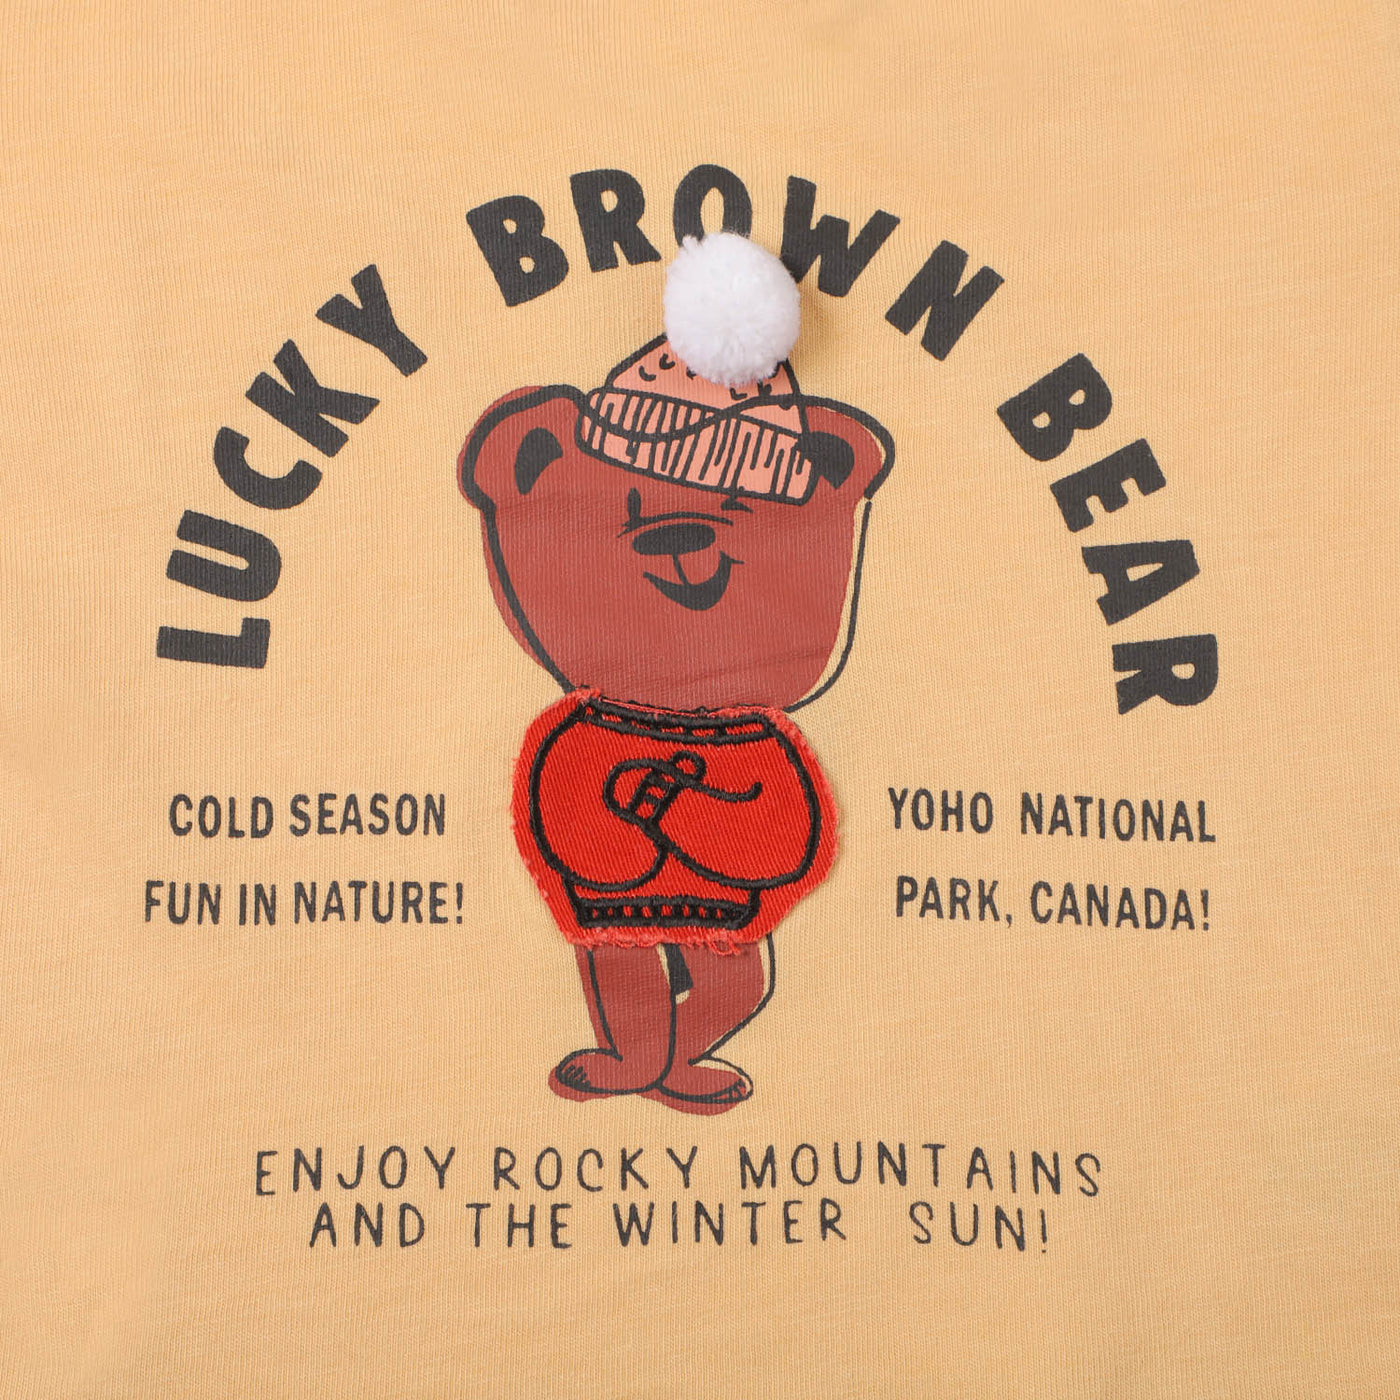 Infant Boys T-Shirt Brown Bear - Beige